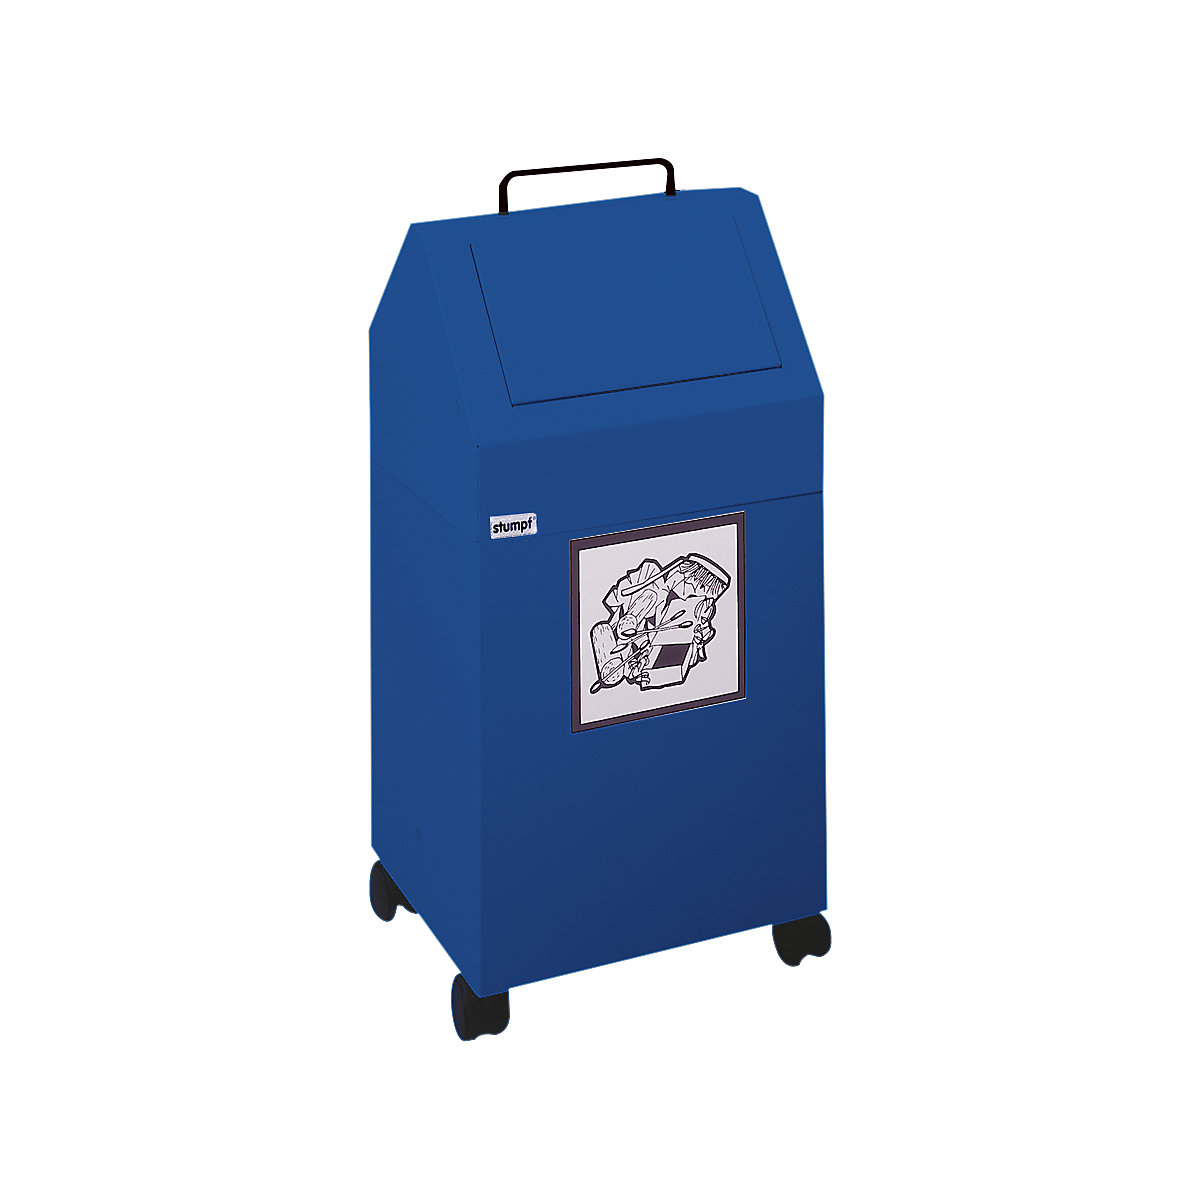 Afvalbak voor kringloopmateriaal met inwerpklep, inhoud 45 l, b x h x d = 320 x 710 x 310 mm, verrijdbaar, blauw RAL 5010-5